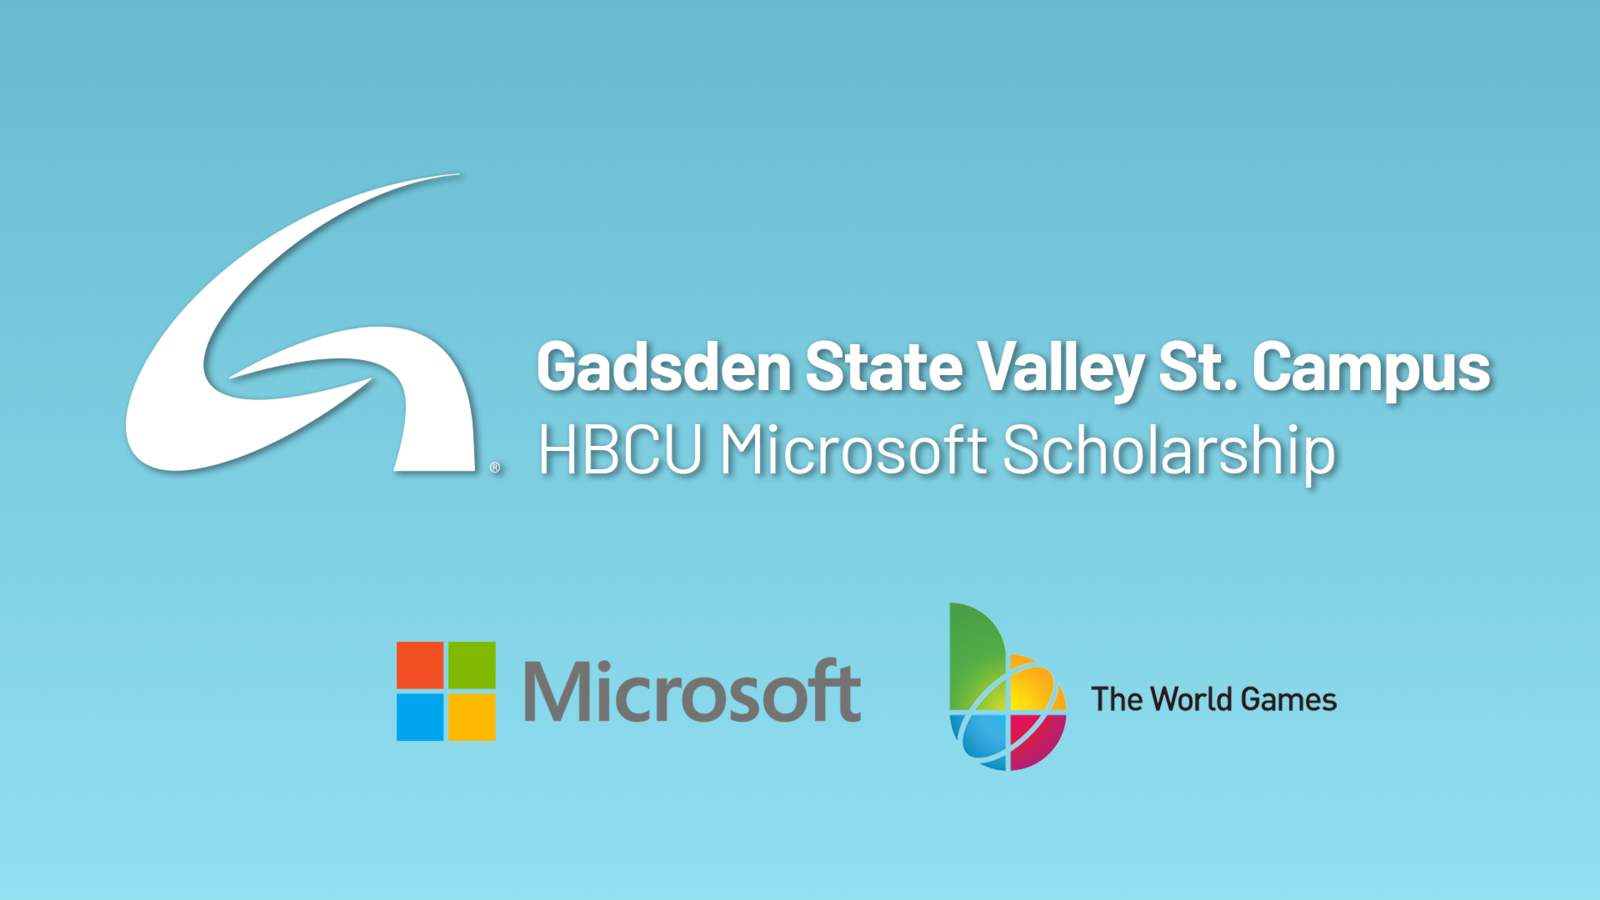 HBCU Microsoft Scholarship